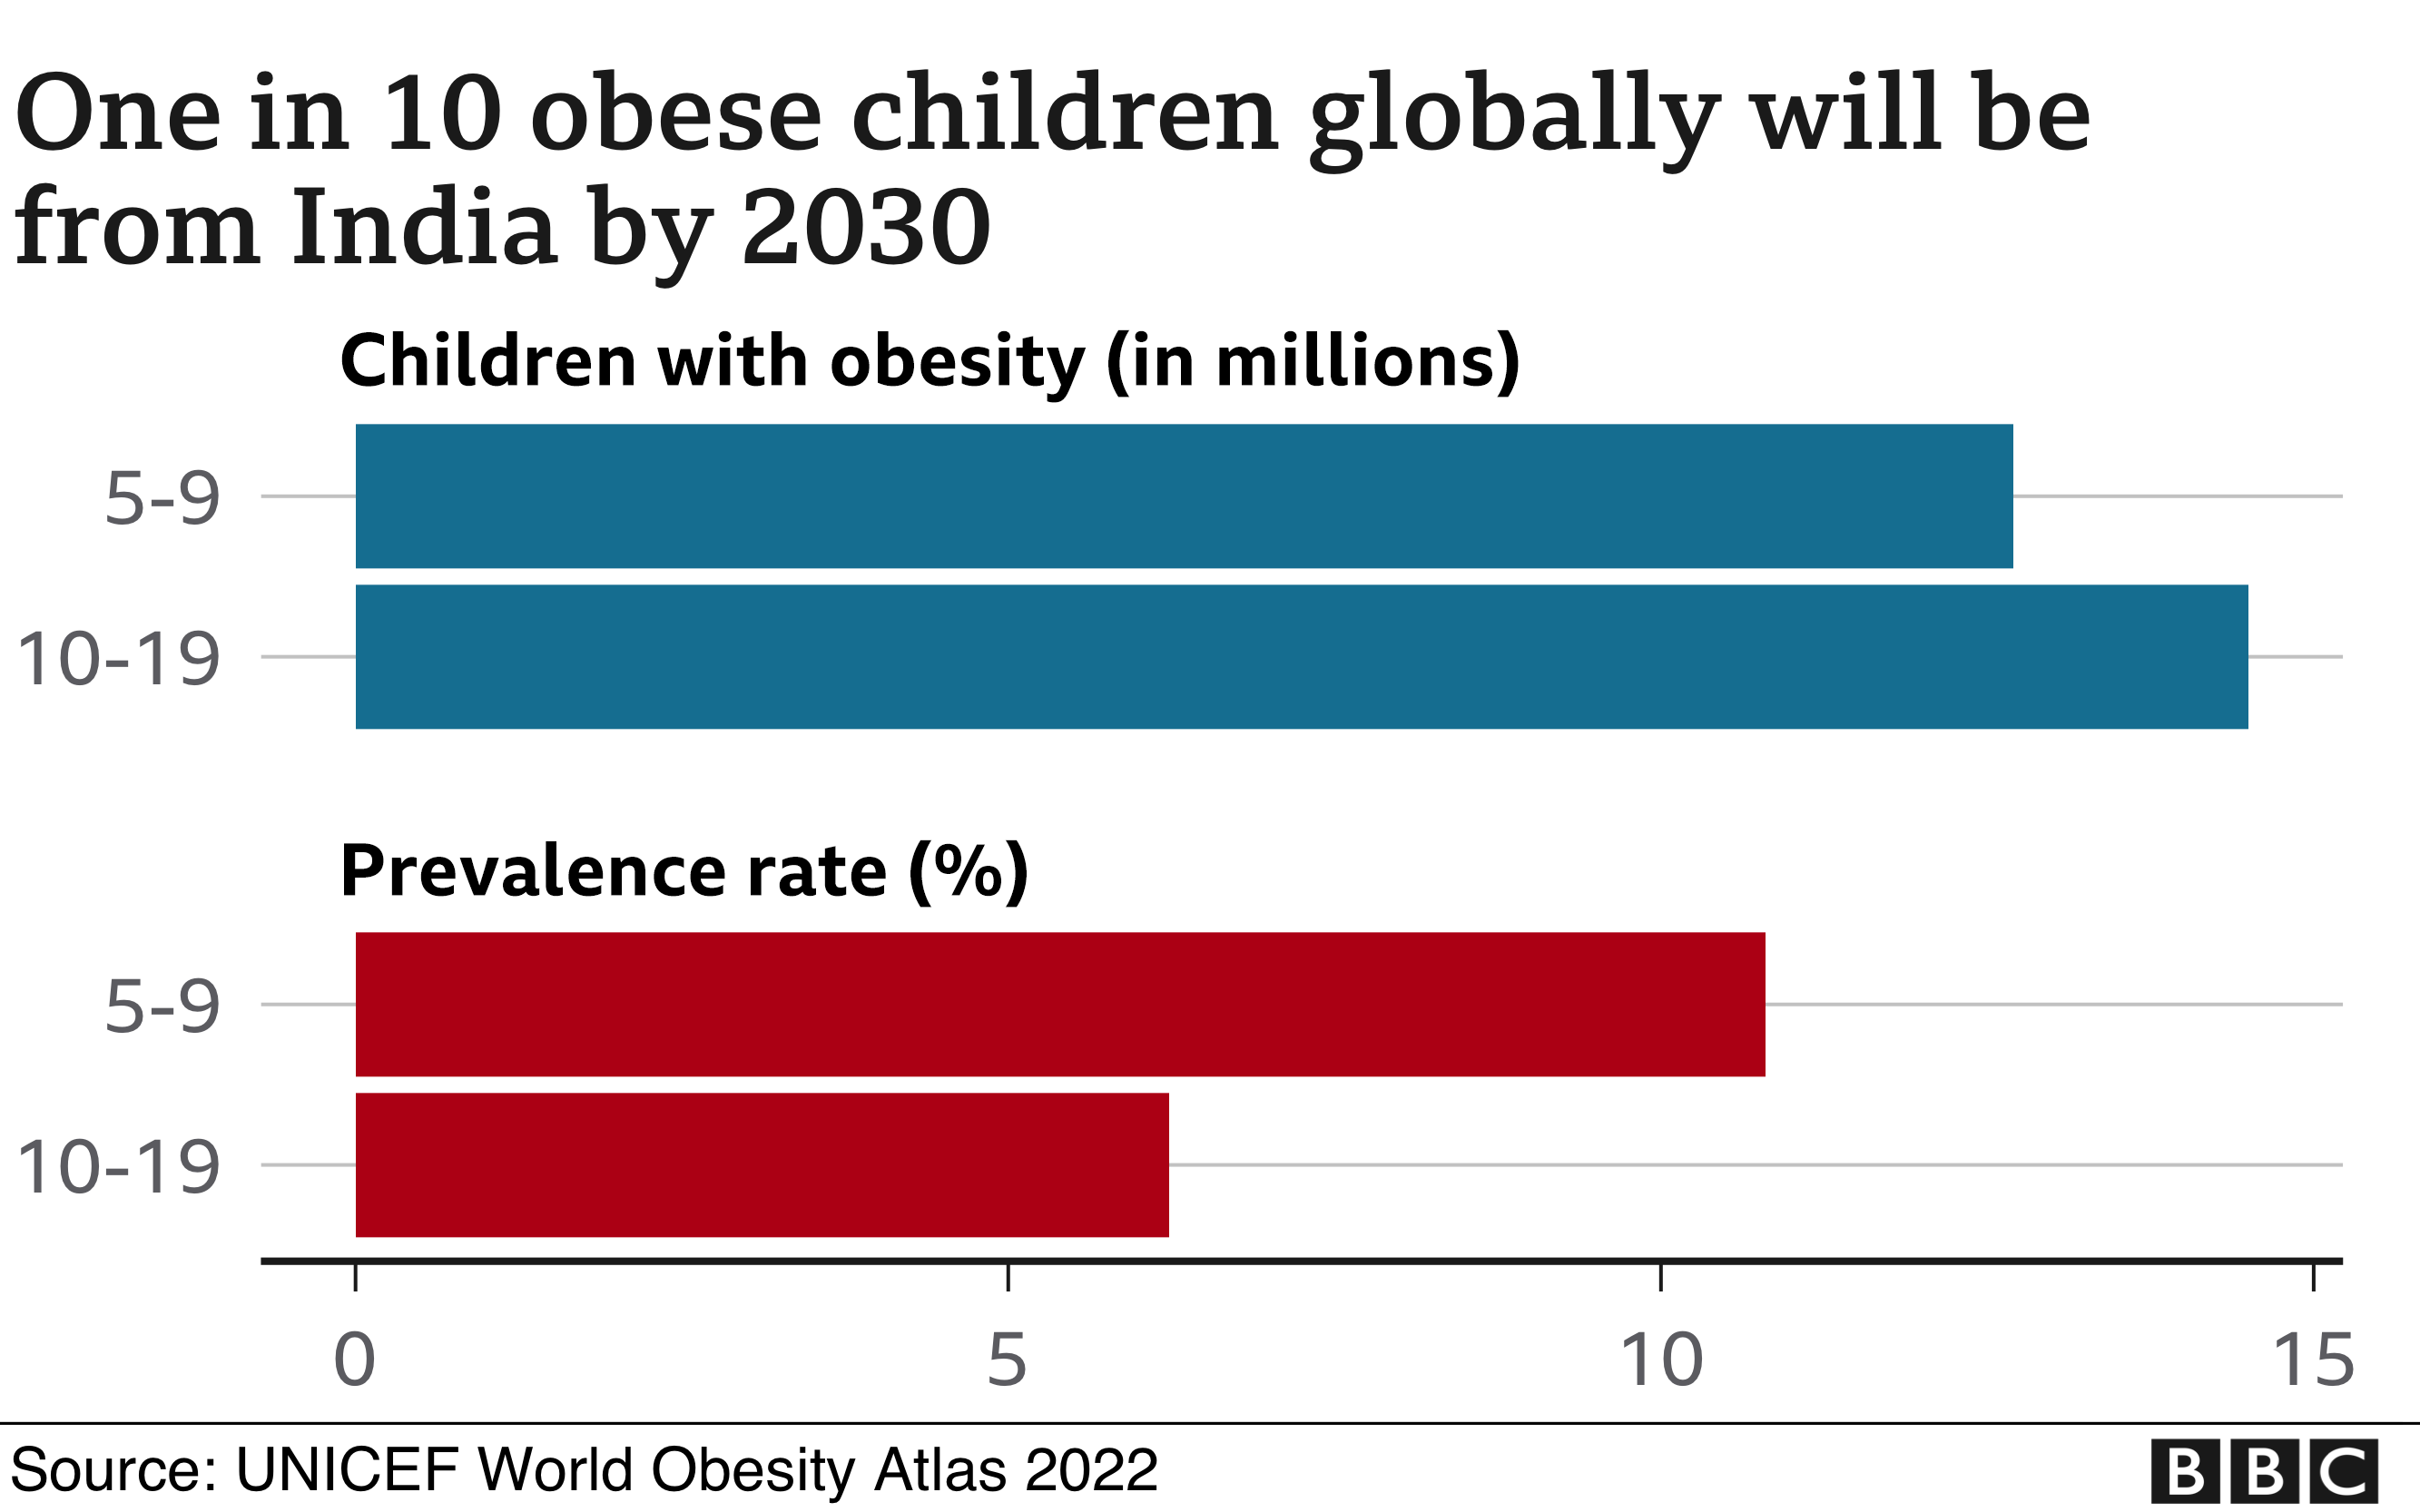 childhood obesity statistics by race